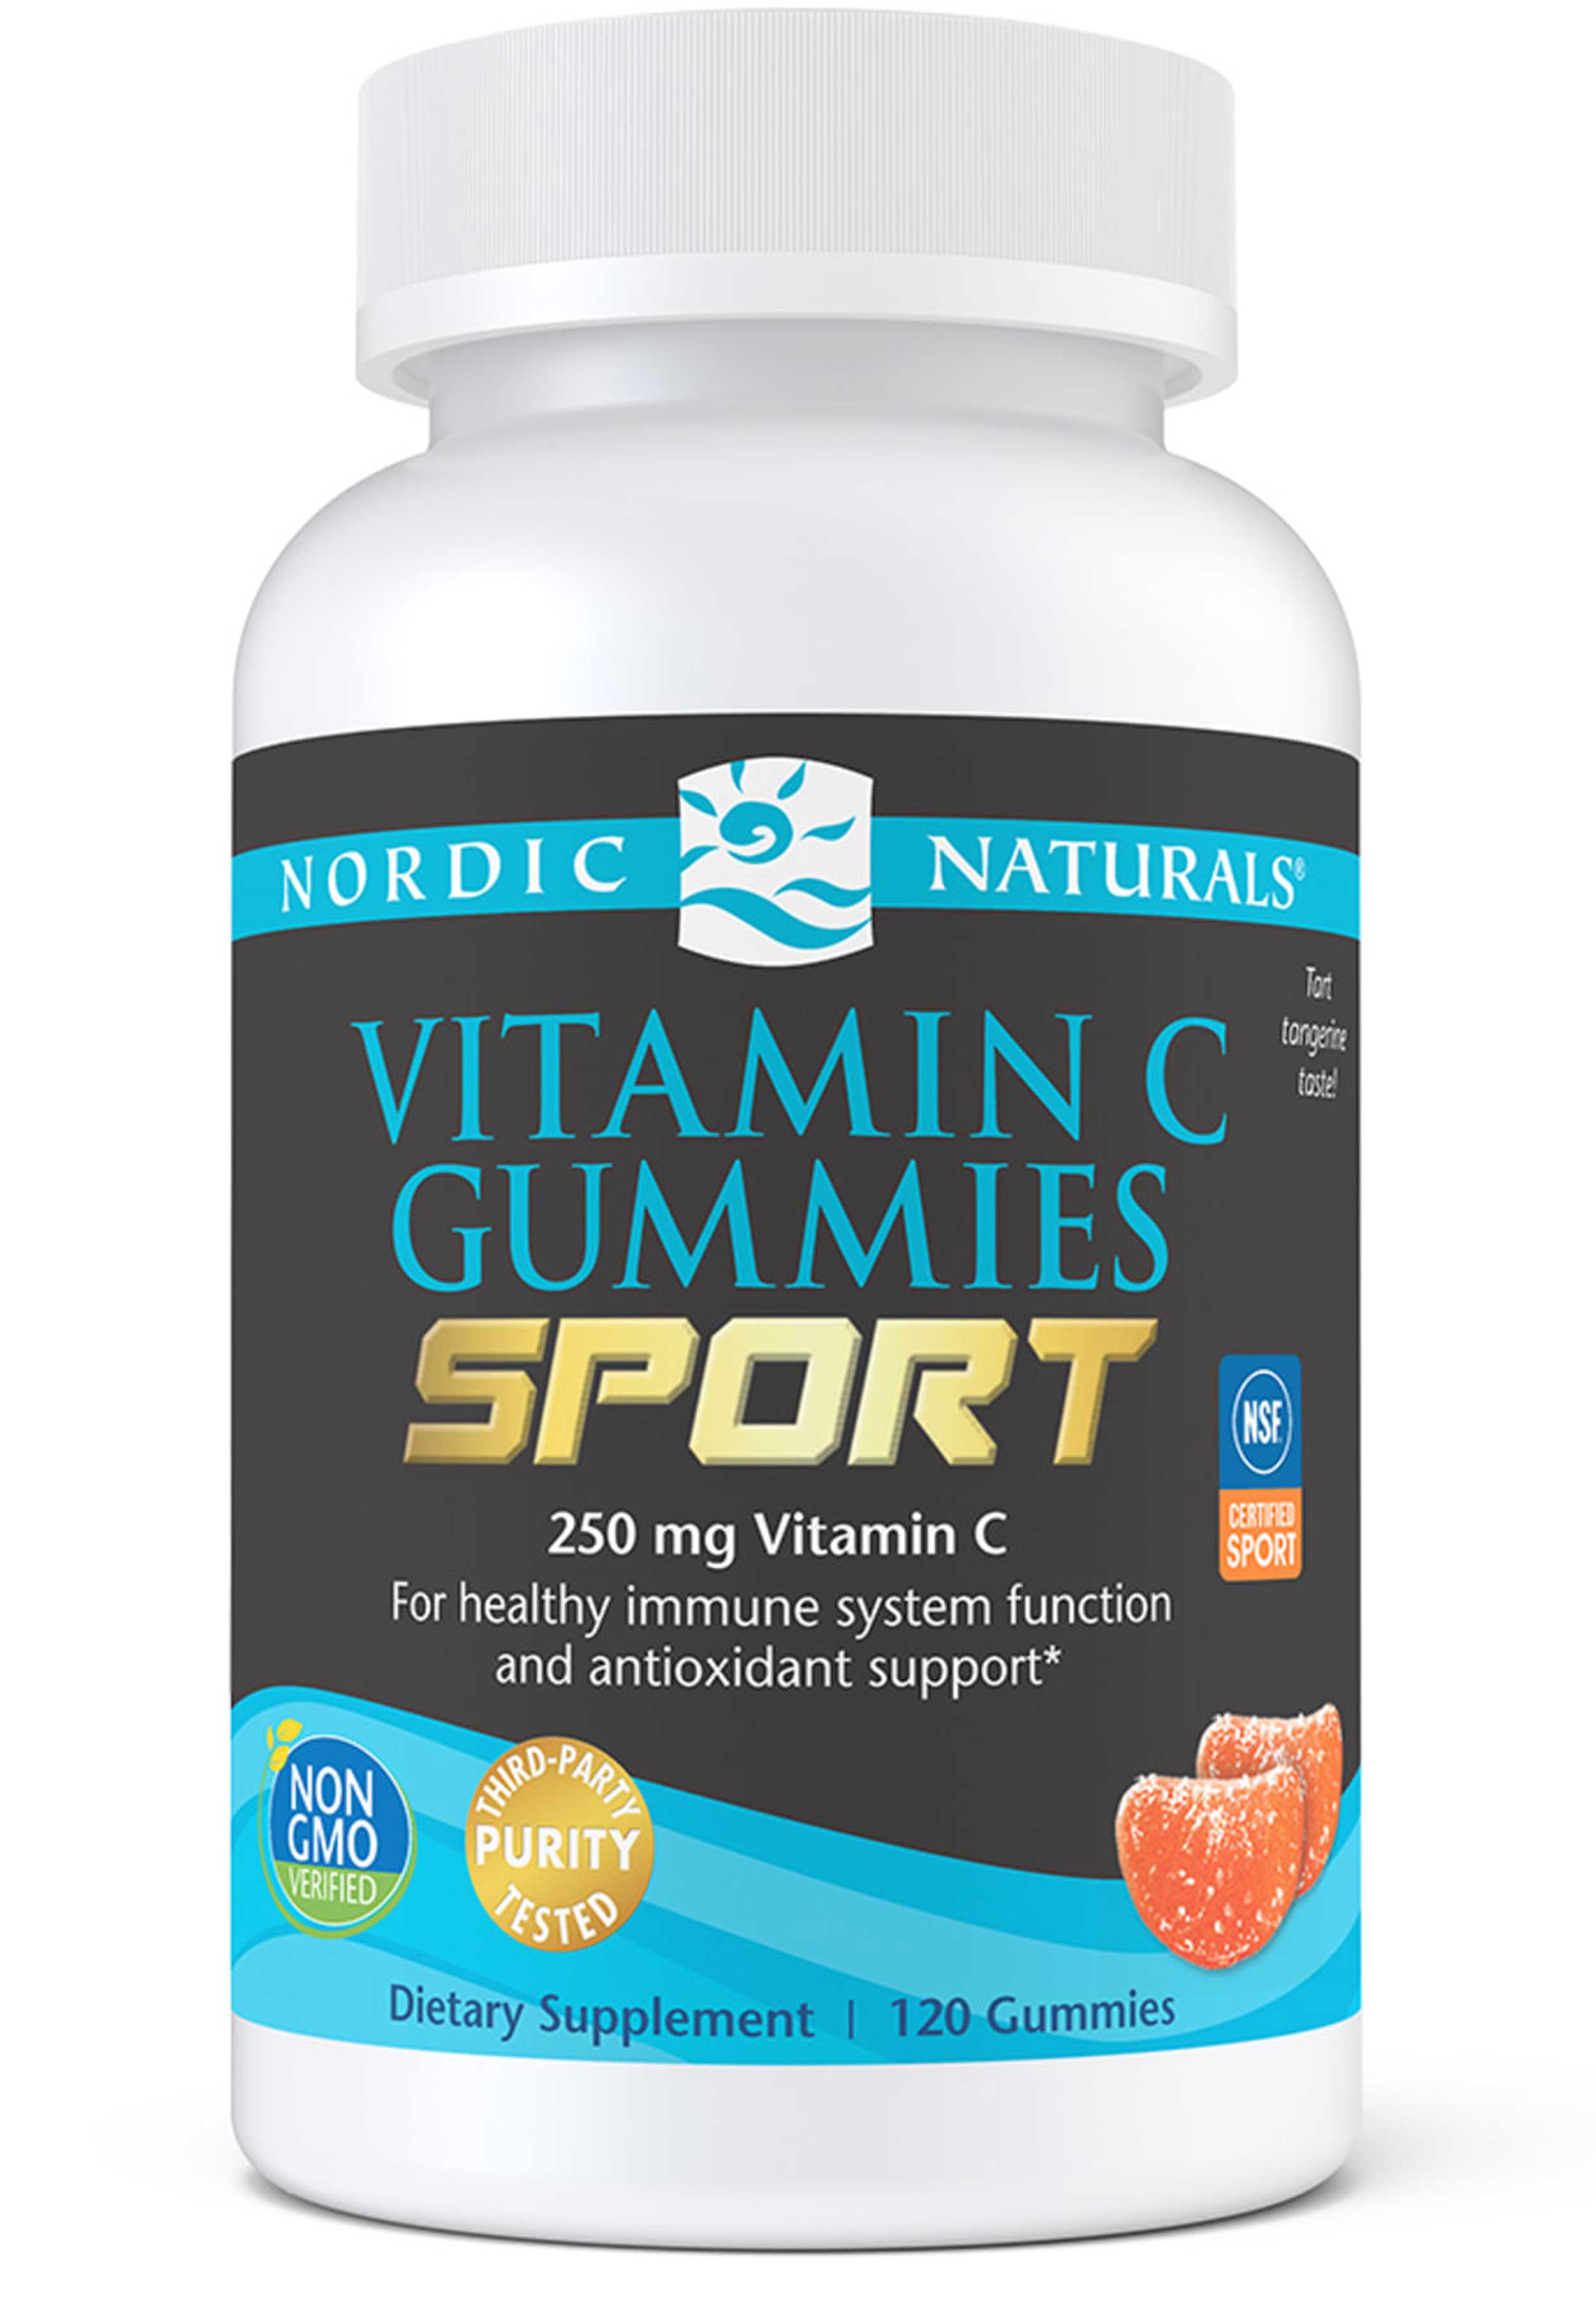 Nordic Naturals Vitamin C Gummies Sport